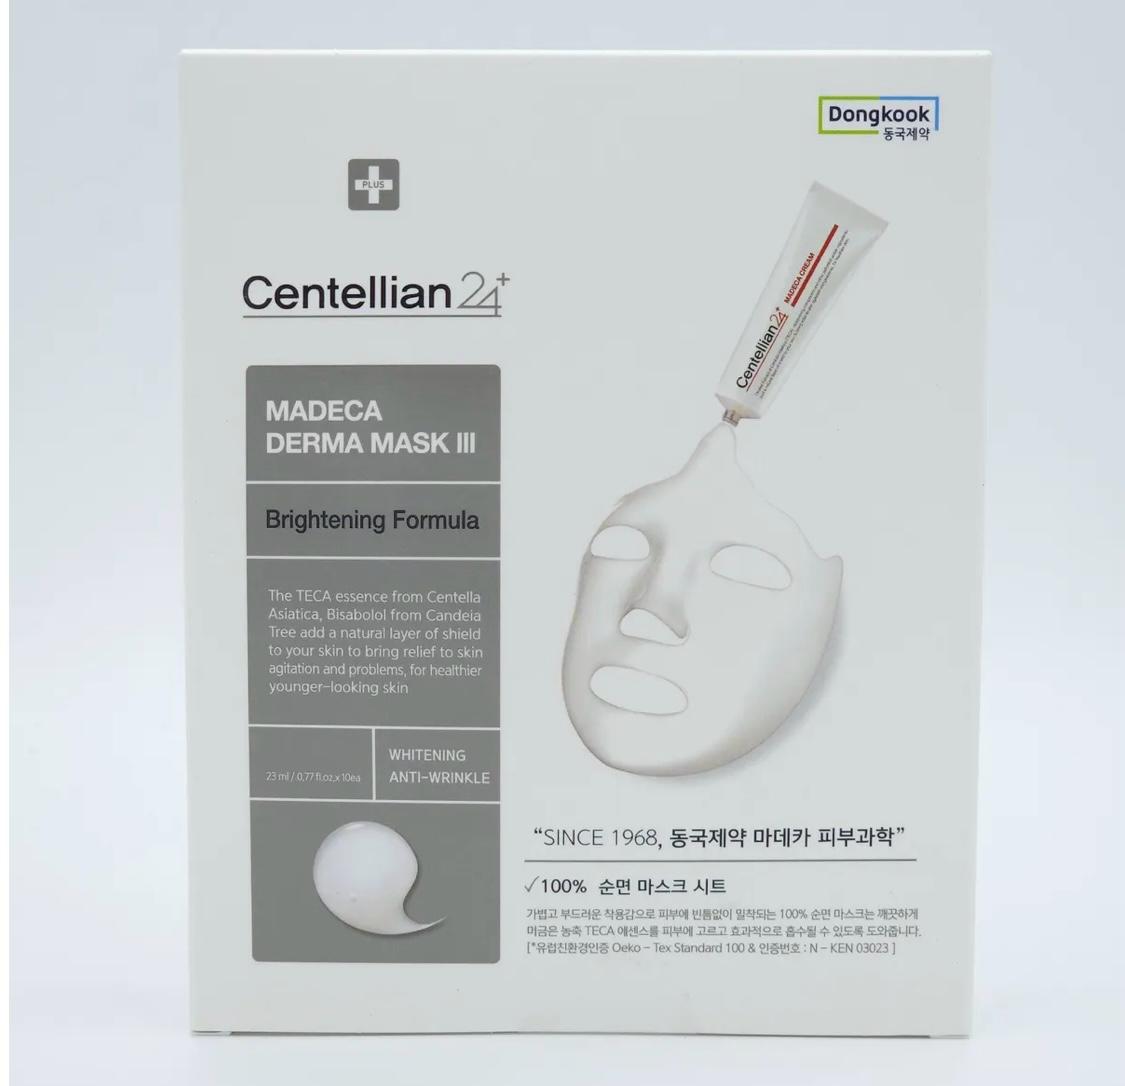 centinella 24 brightening formula mask -10 masks per box